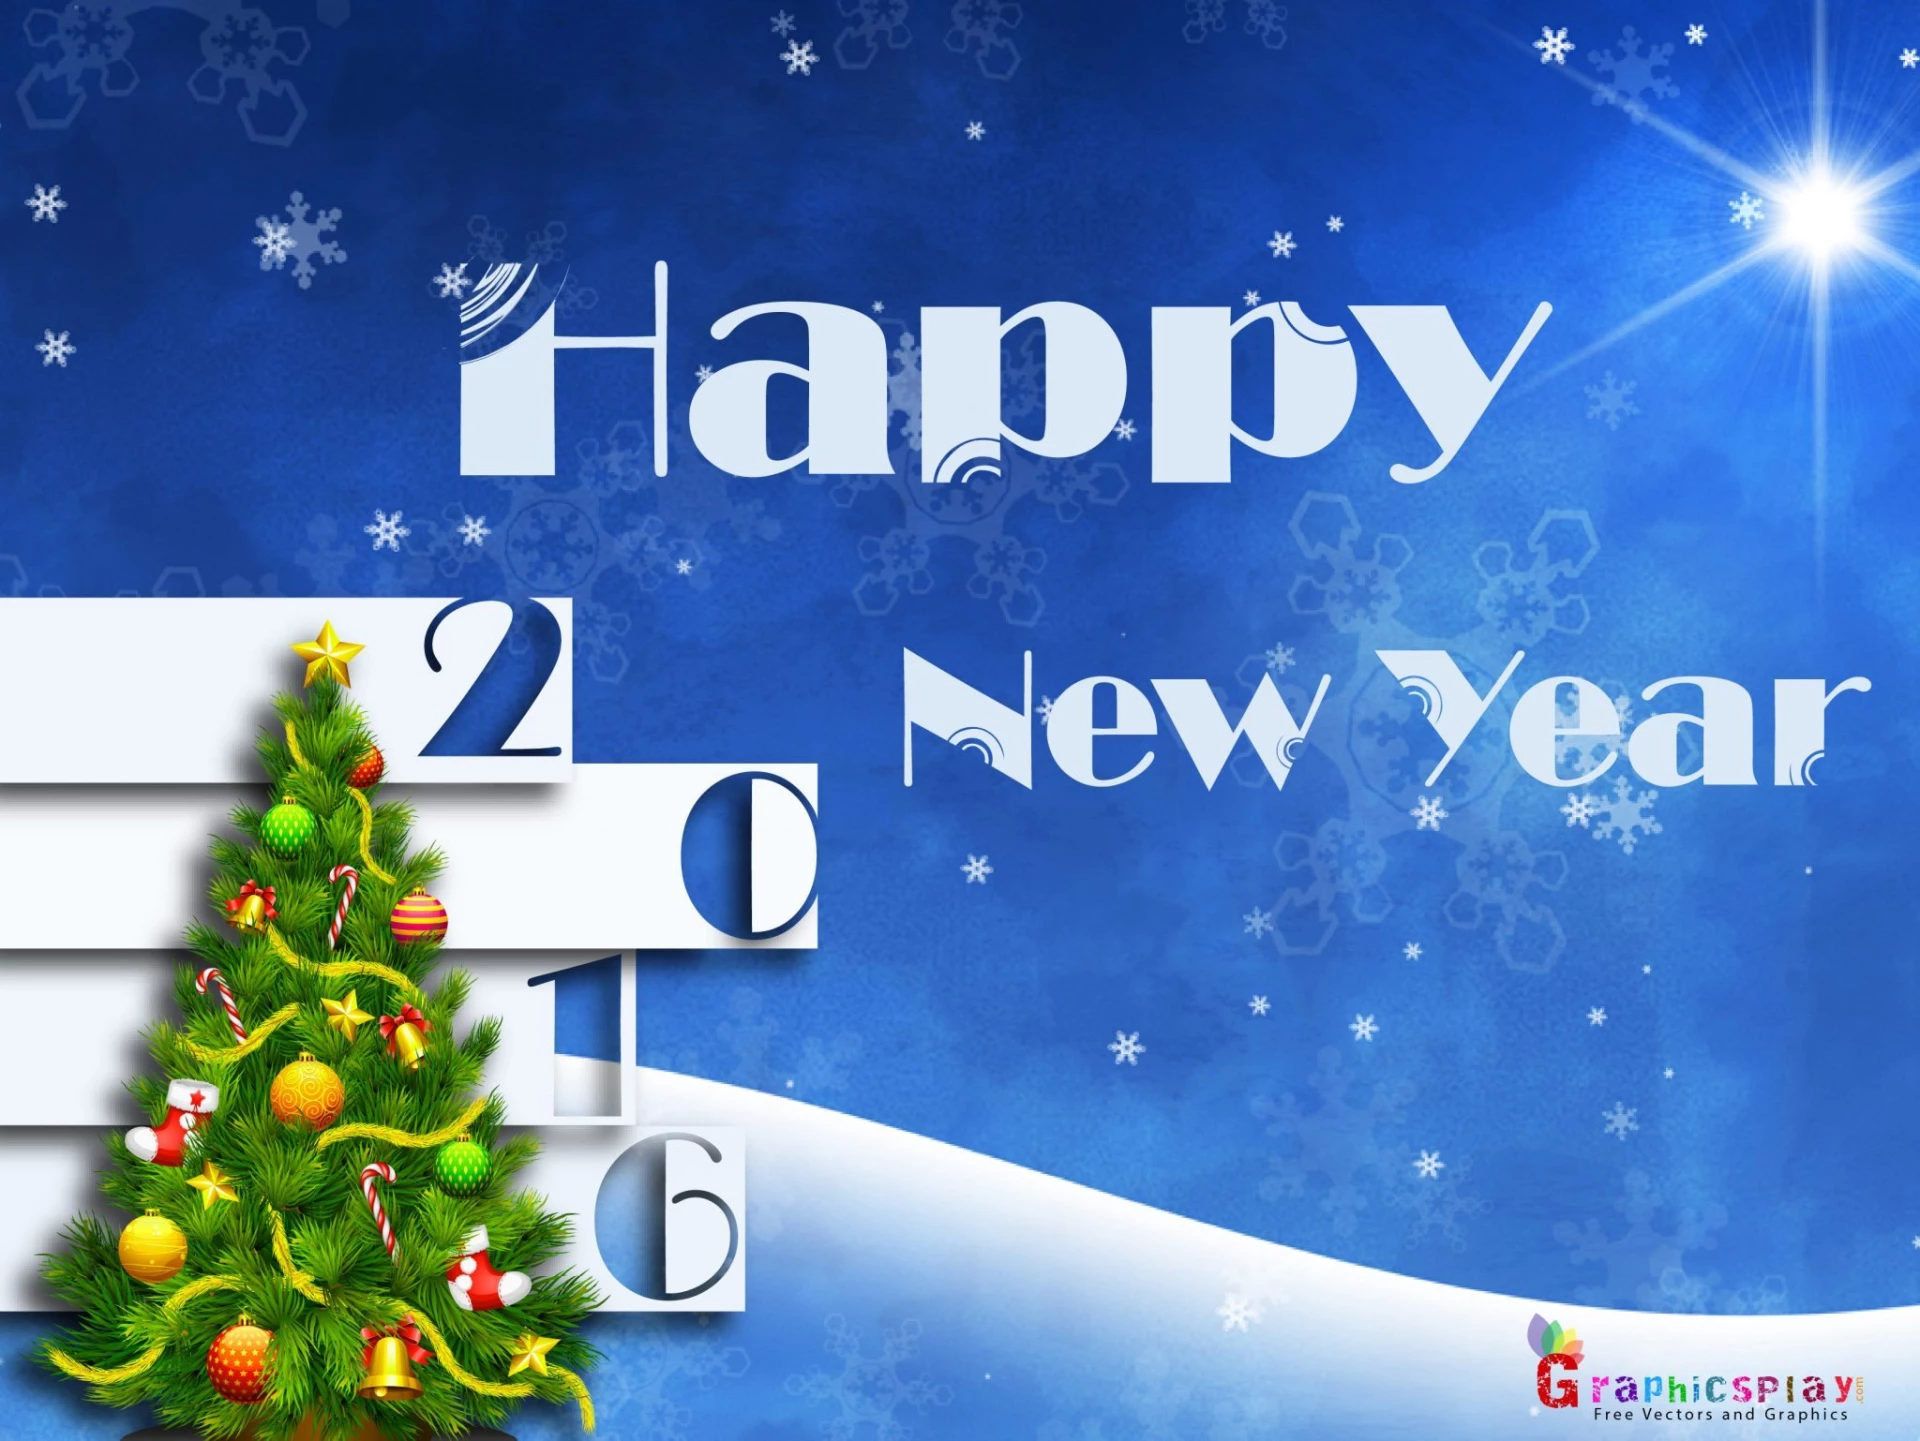 Happy New Year Greeting 2016 1